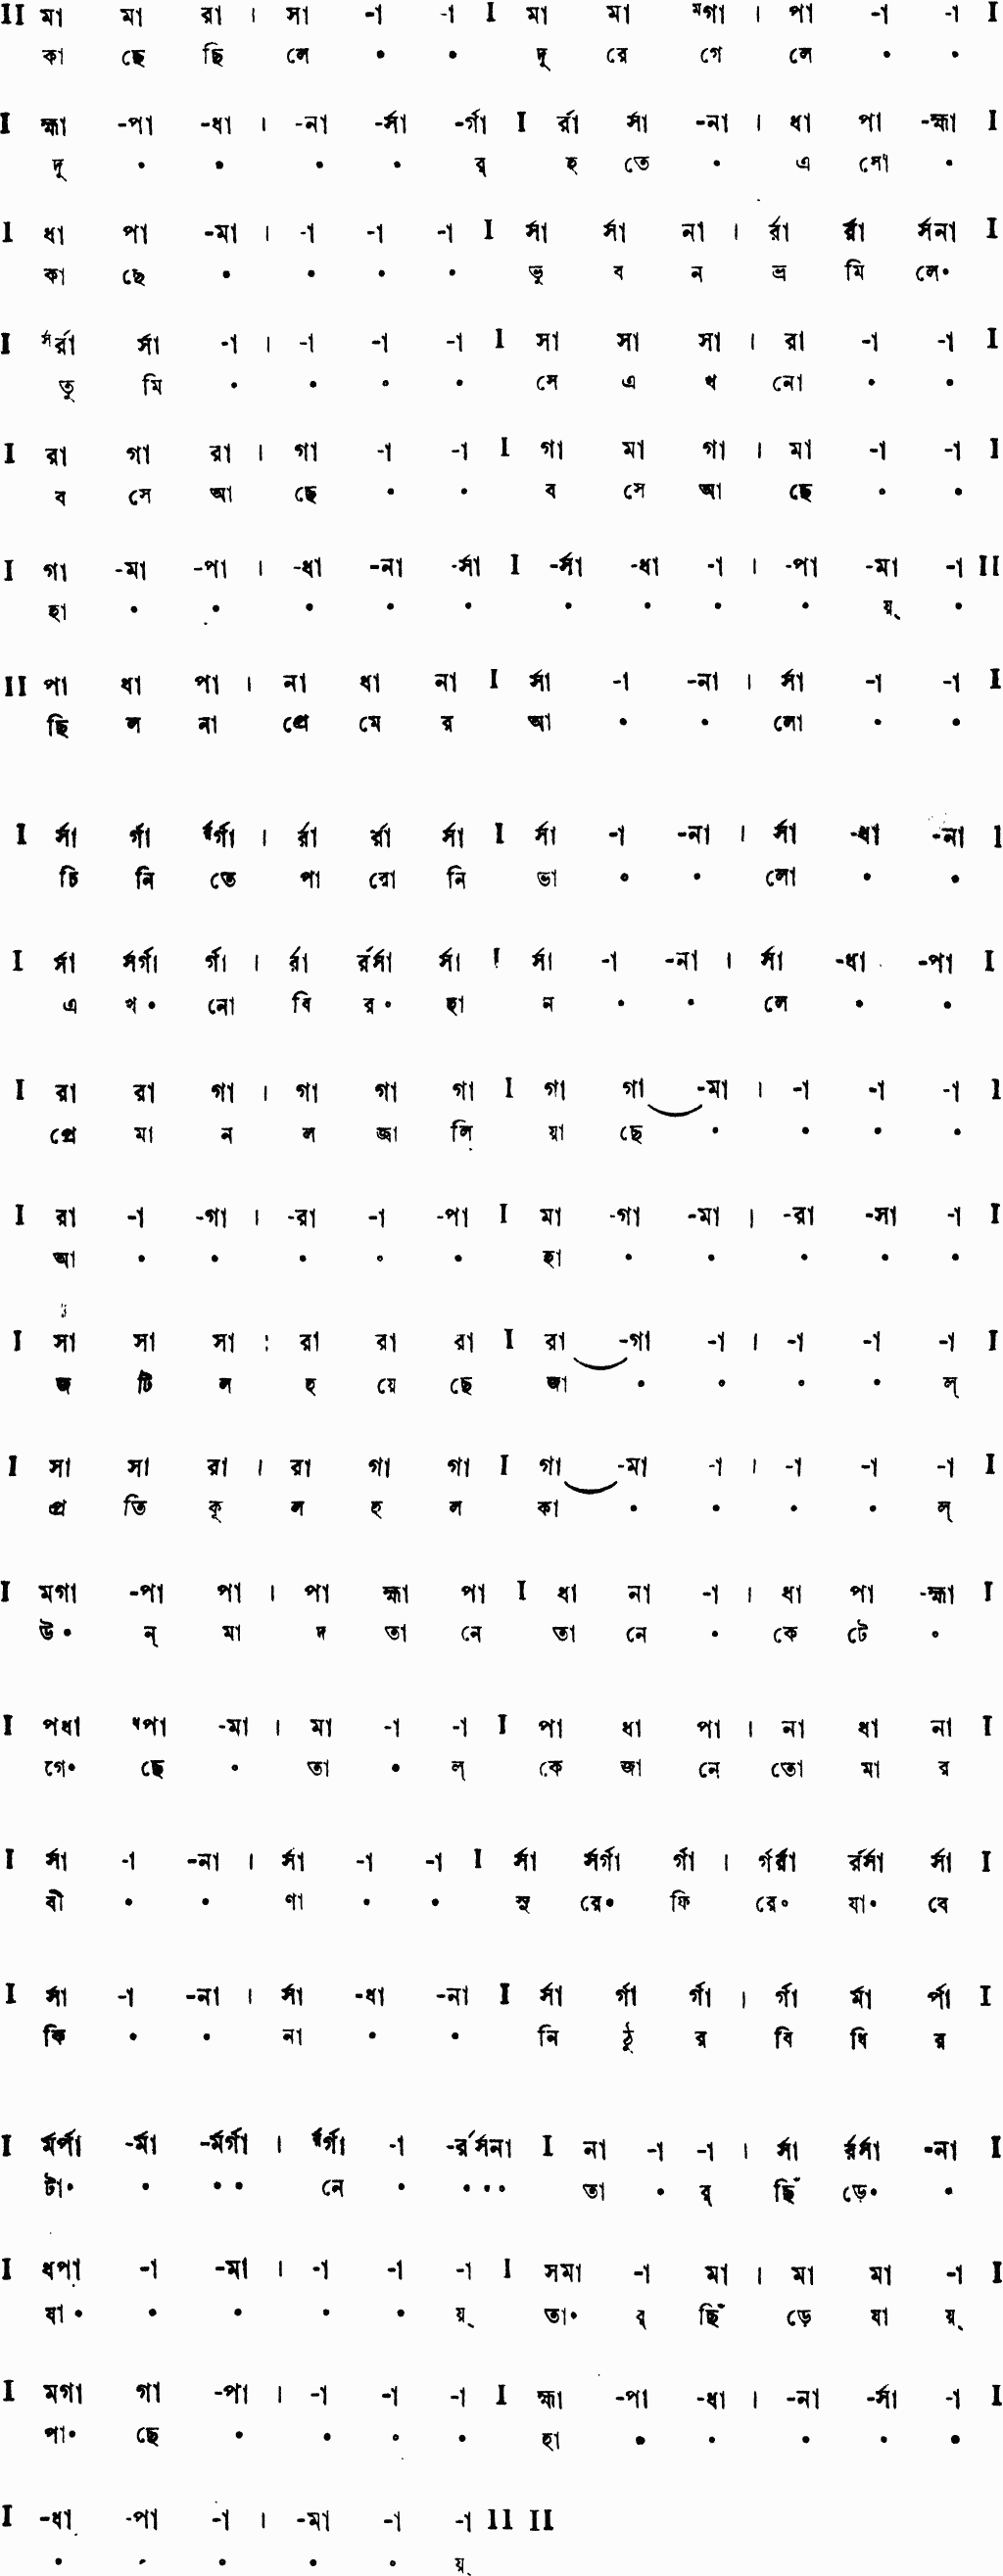 Notation kachhe chhile dure 2